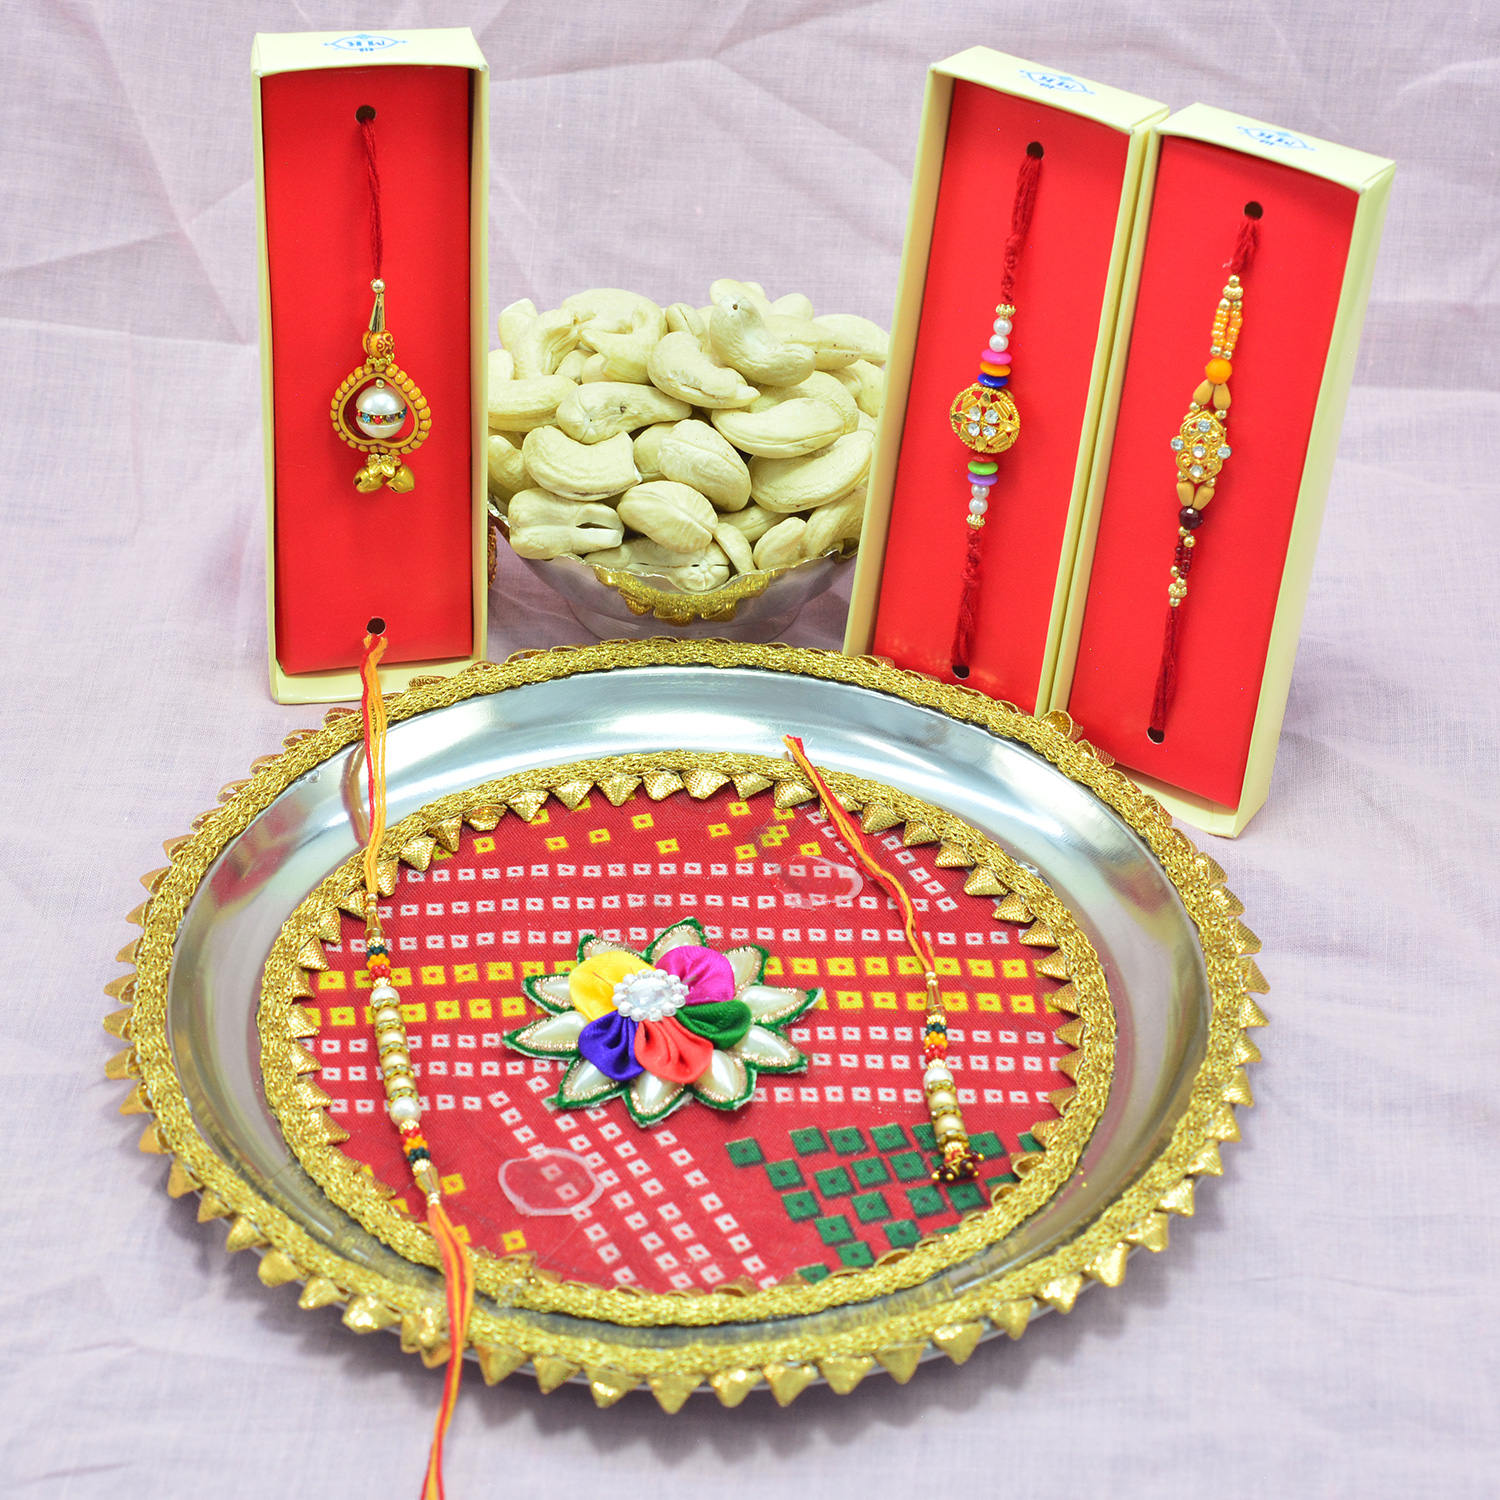 Rajasthani Design Flower in Mid Colorful Rakhi Pooja Thali with Rakhis and Fresh Kaju Dry Fruits Hamper